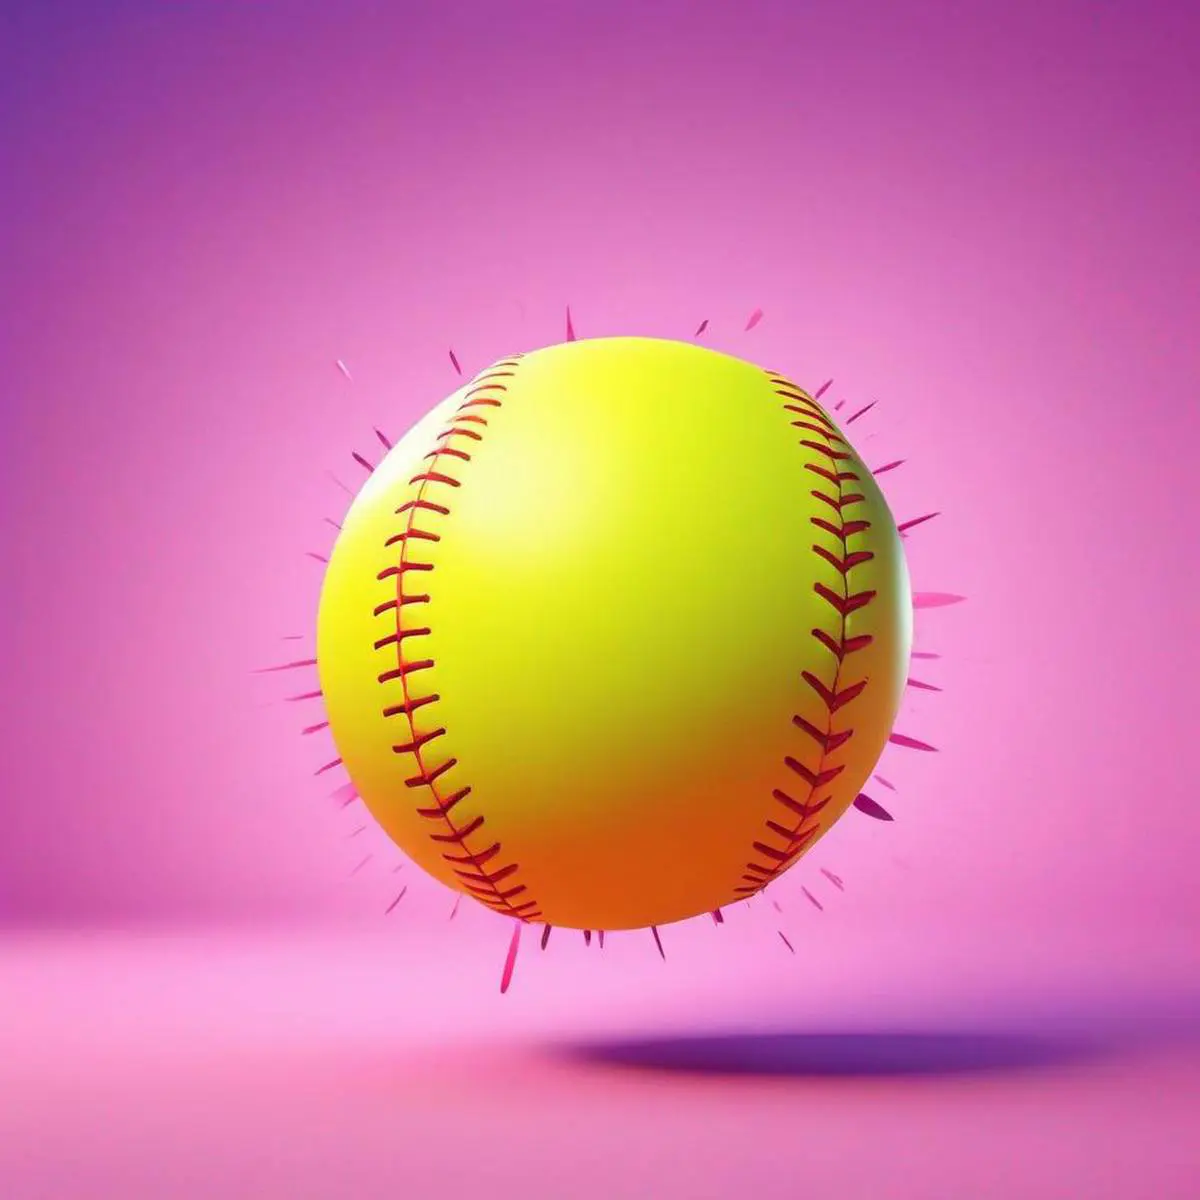 Softball puns